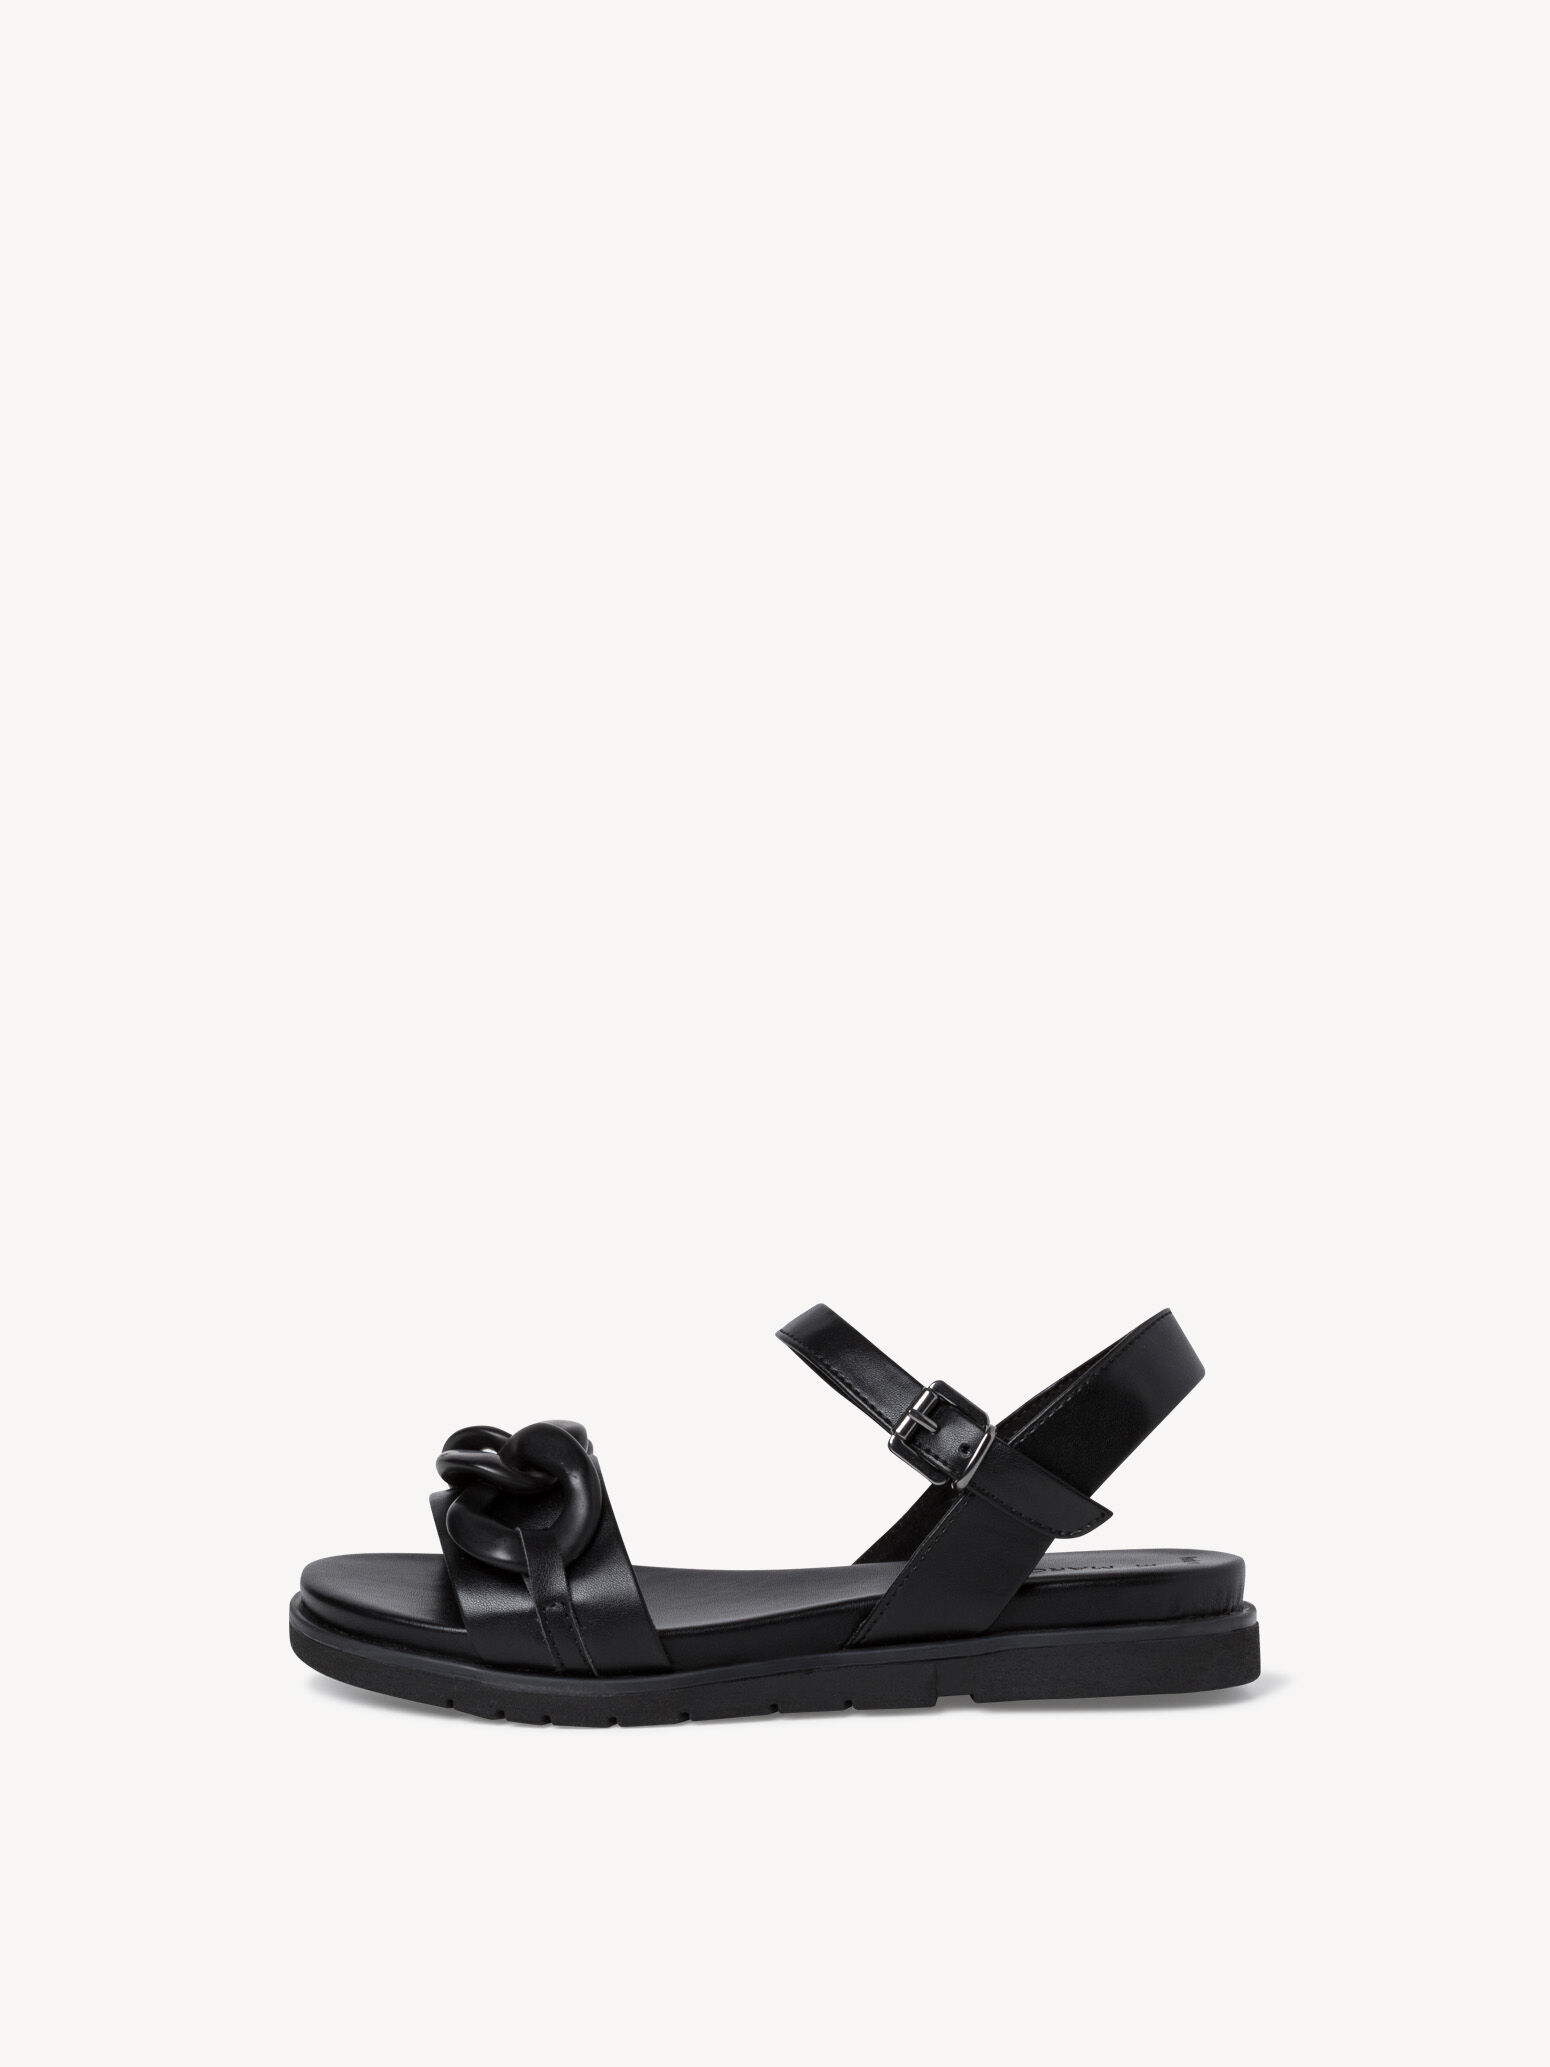 Sandal 2-2-28406-28: Buy from Marco Tozzi online!